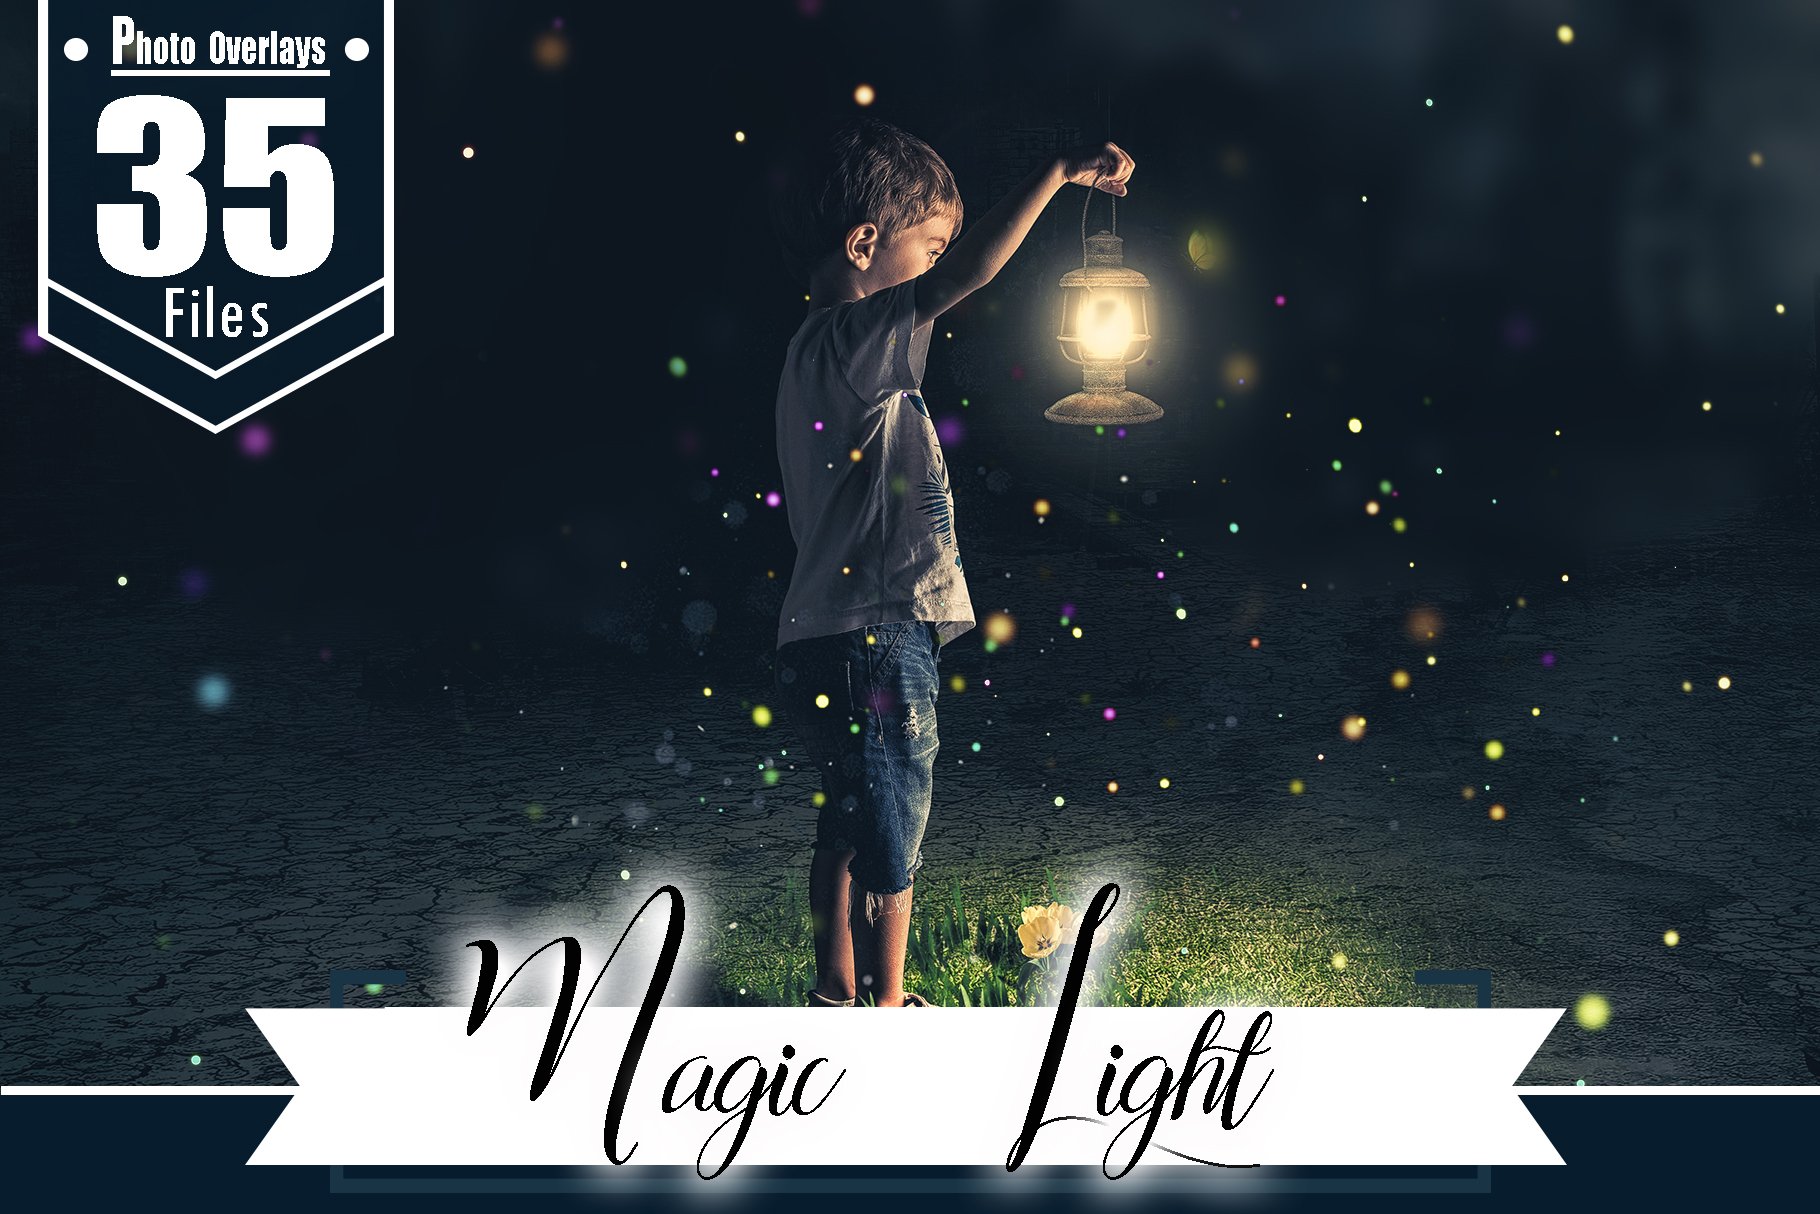 35 magic shine light photo overlayscover image.